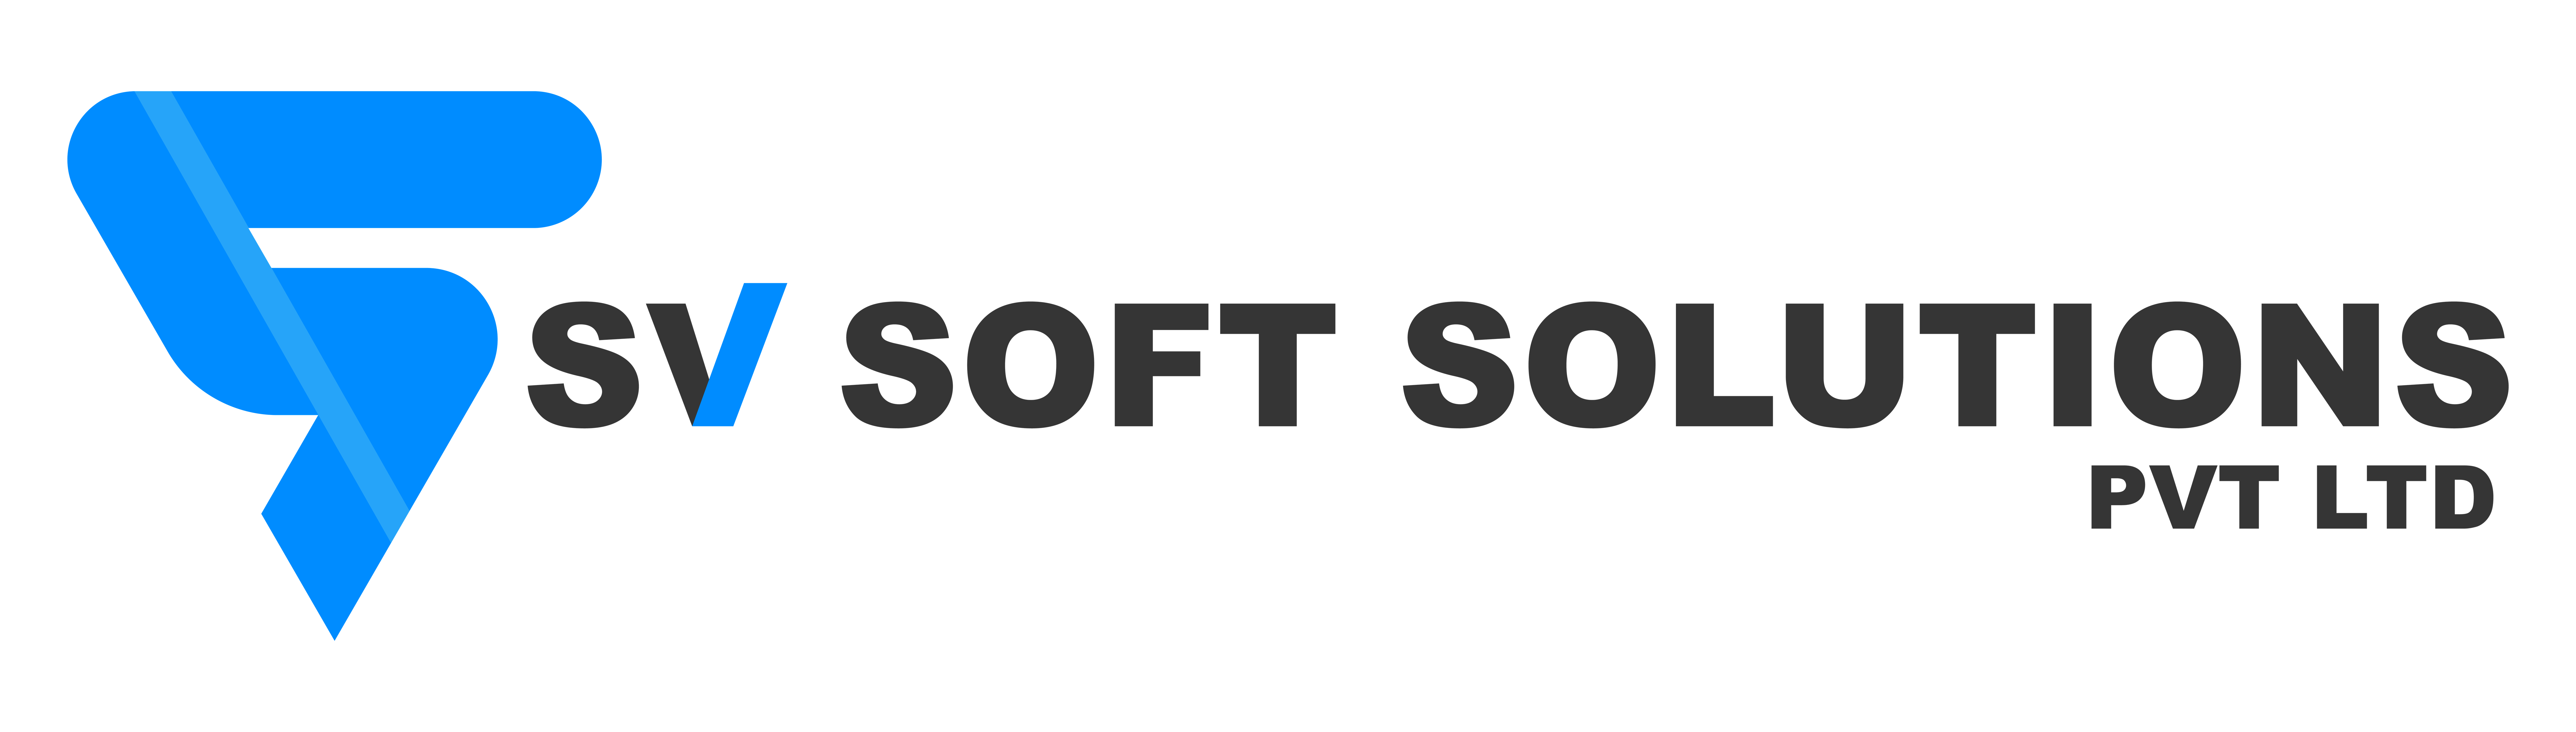 Sv Soft Solutions Pvt Ltd